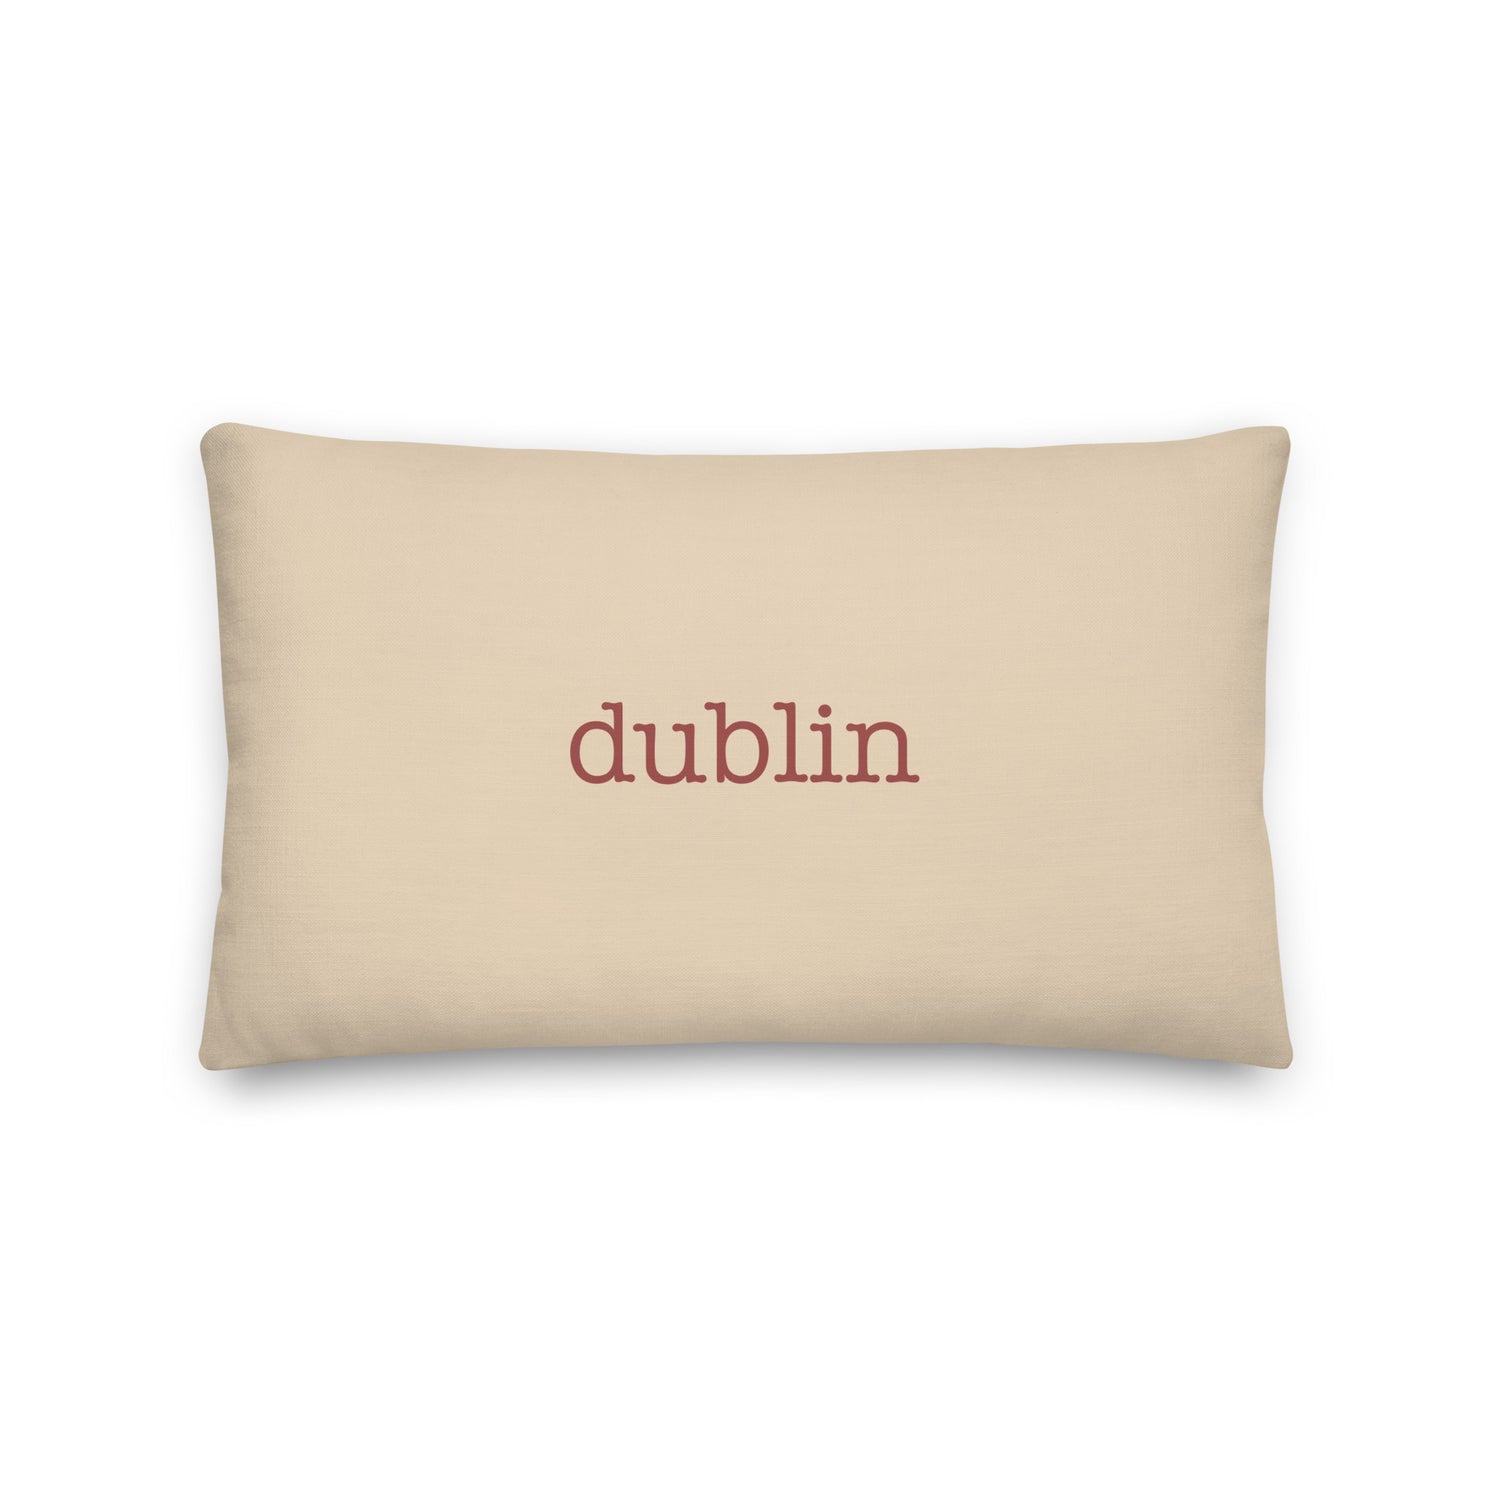 Dublin Ireland Pillows and Blankets • DUB Airport Code